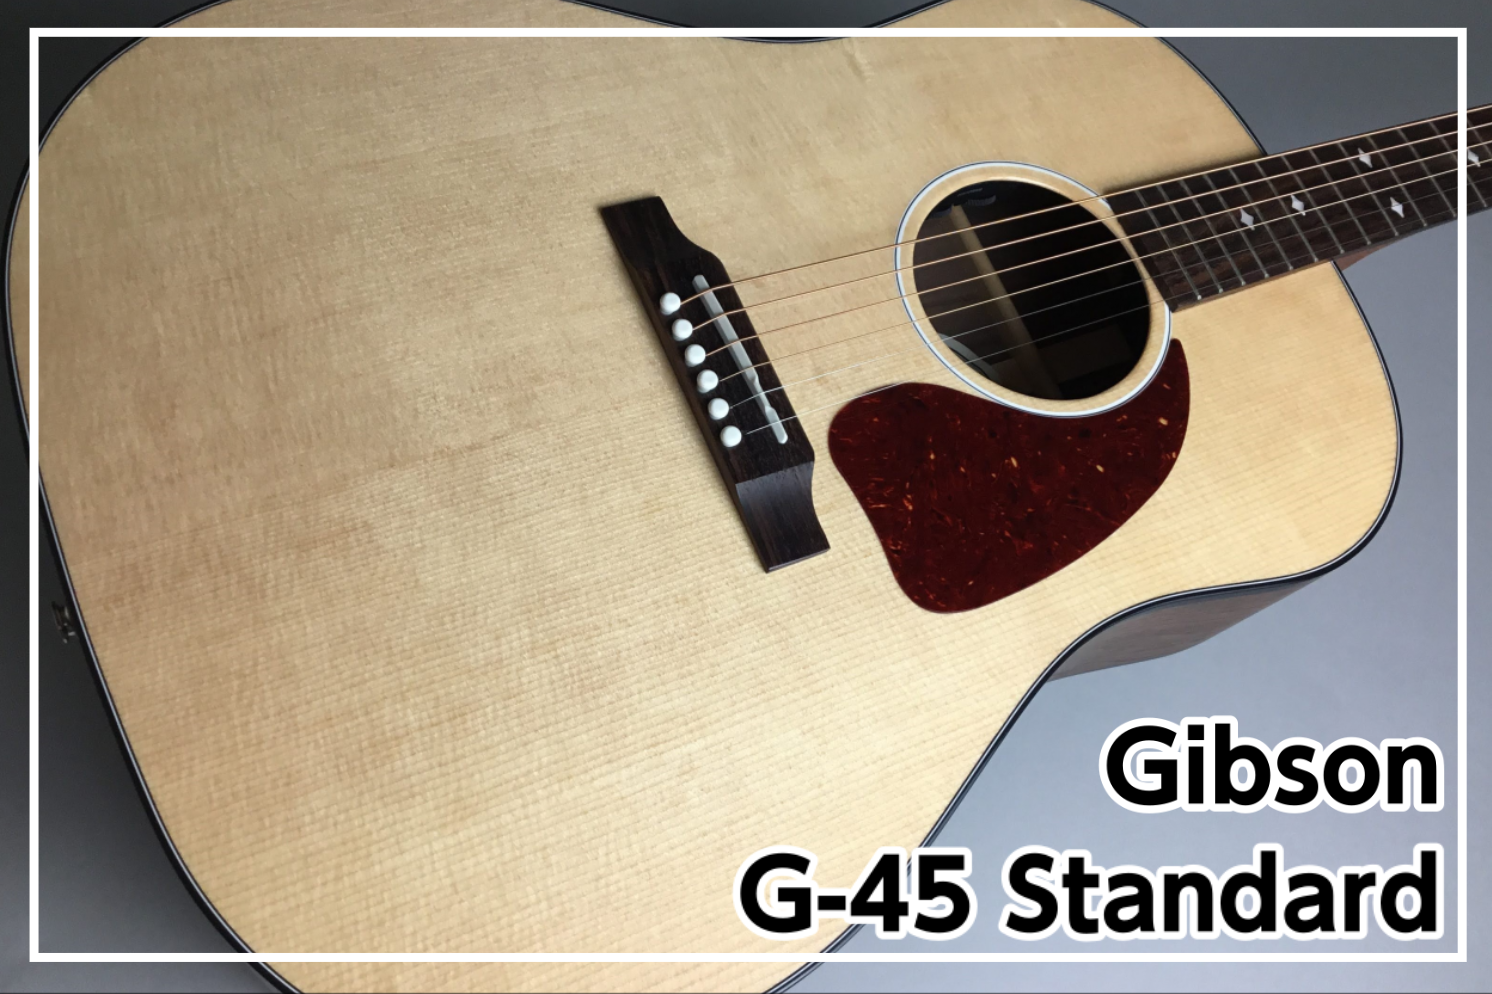 *Gibson G-45 Standard 入荷!! **MENU [#a:title=商品紹介] [#b:title=価格] [#c:title=問合せ] ===a=== **商品紹介 G-45スタンダードは、革命的な新製品であるG-45シリーズの基本デザインに則り、あらゆる層のプレイヤーやあらゆ […]